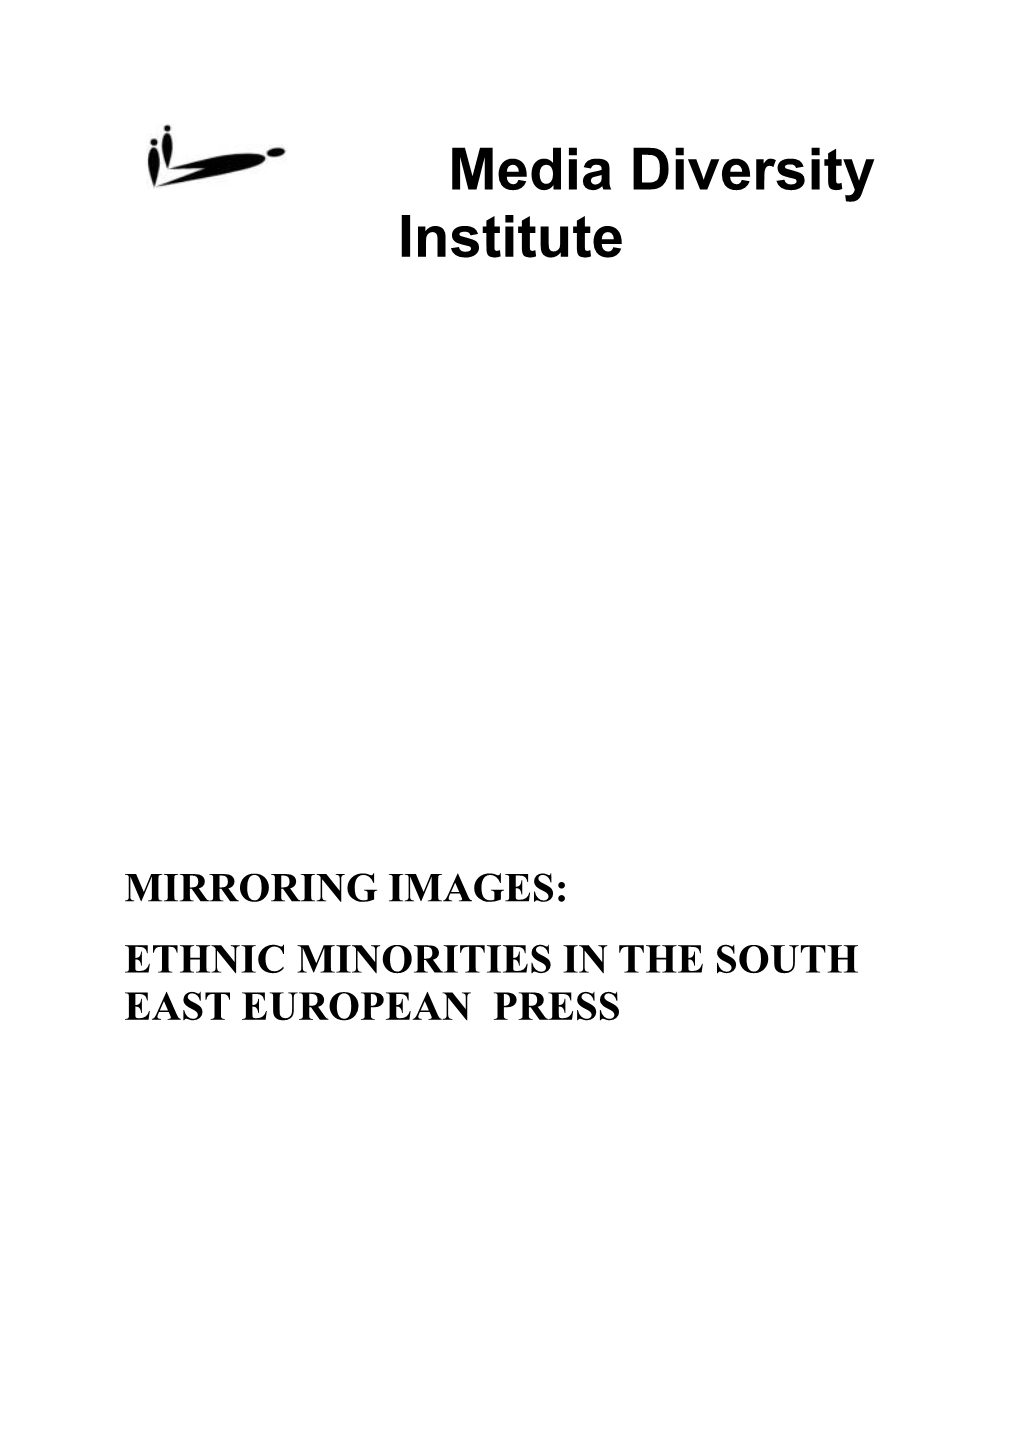 Ethnic Minorities in the South East European Press